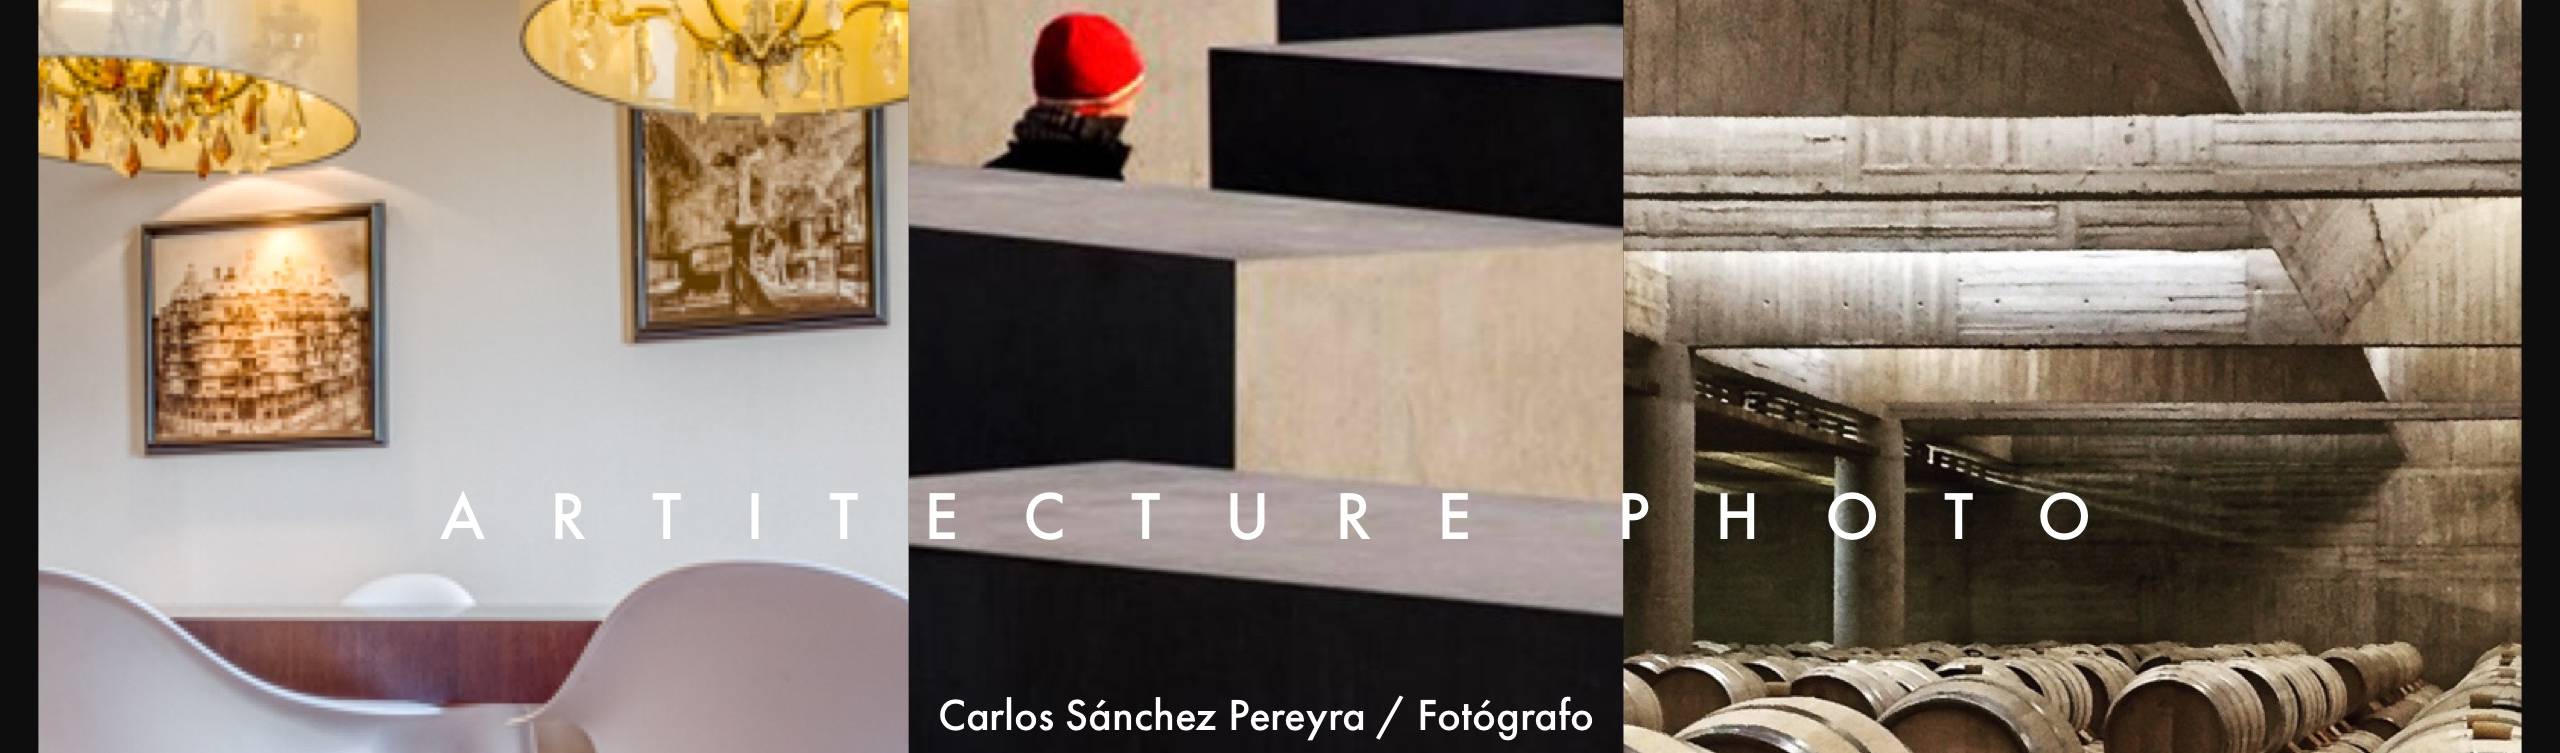 Carlos Sánchez Pereyra | Artitecture Photo | Fotógrafo